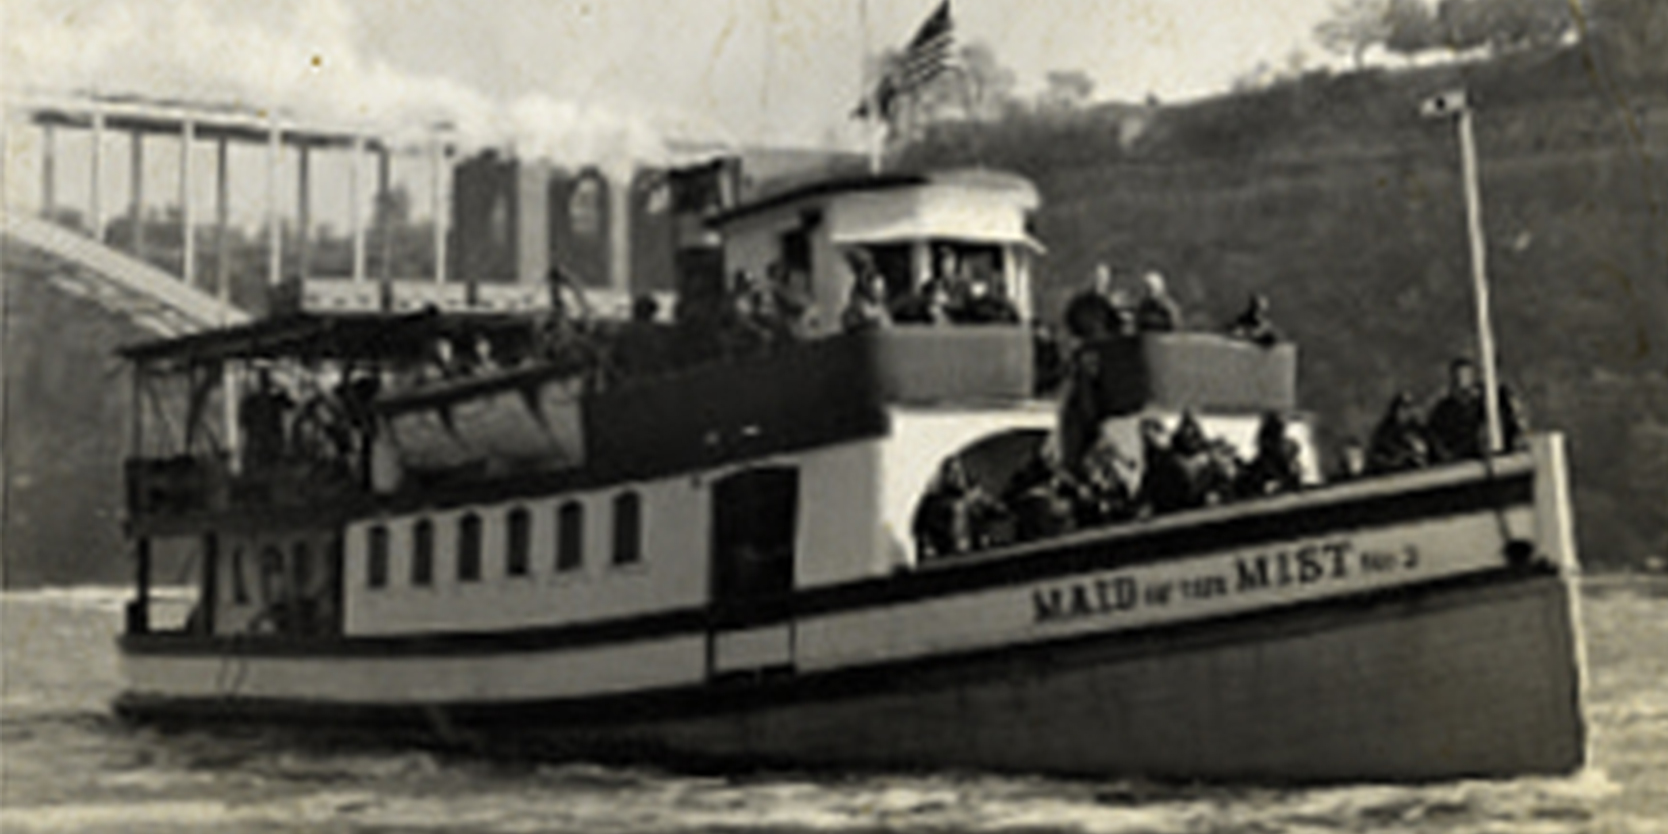 Vintage Maid of the Mist boat